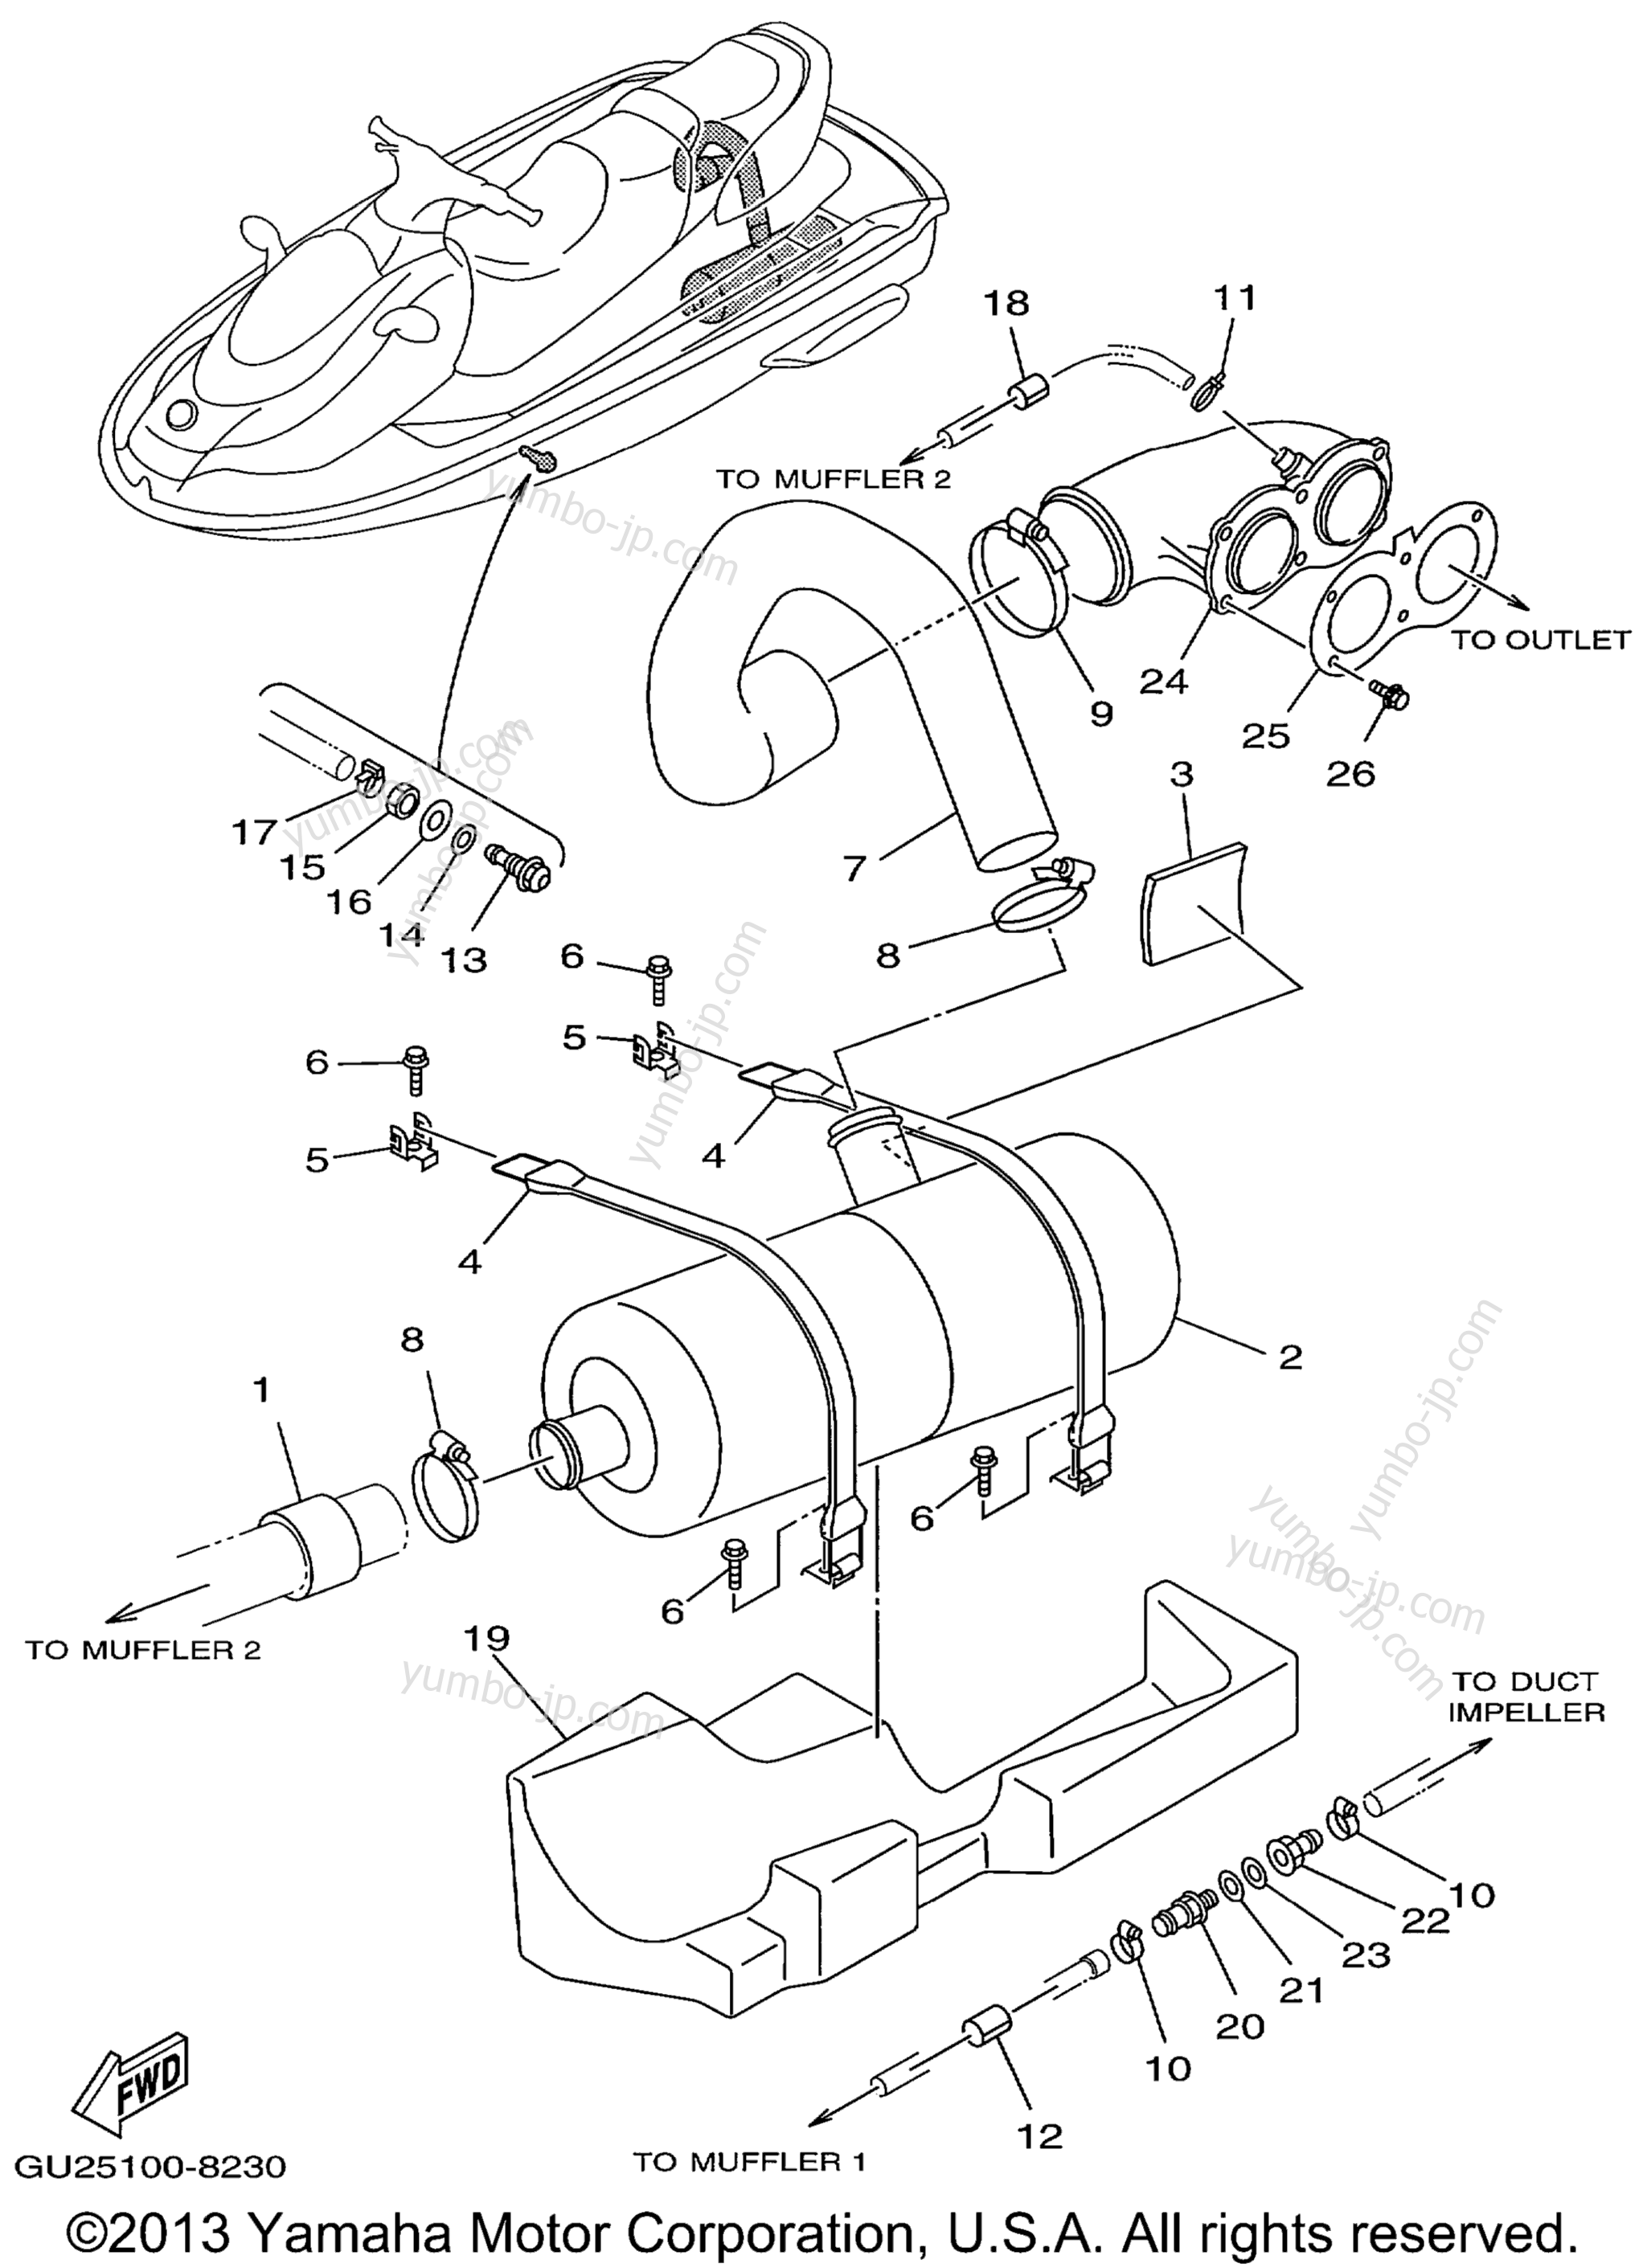 Exhaust 2 для гидроциклов YAMAHA WAVE RUNNER XL760 (XL760X) 1999 г.